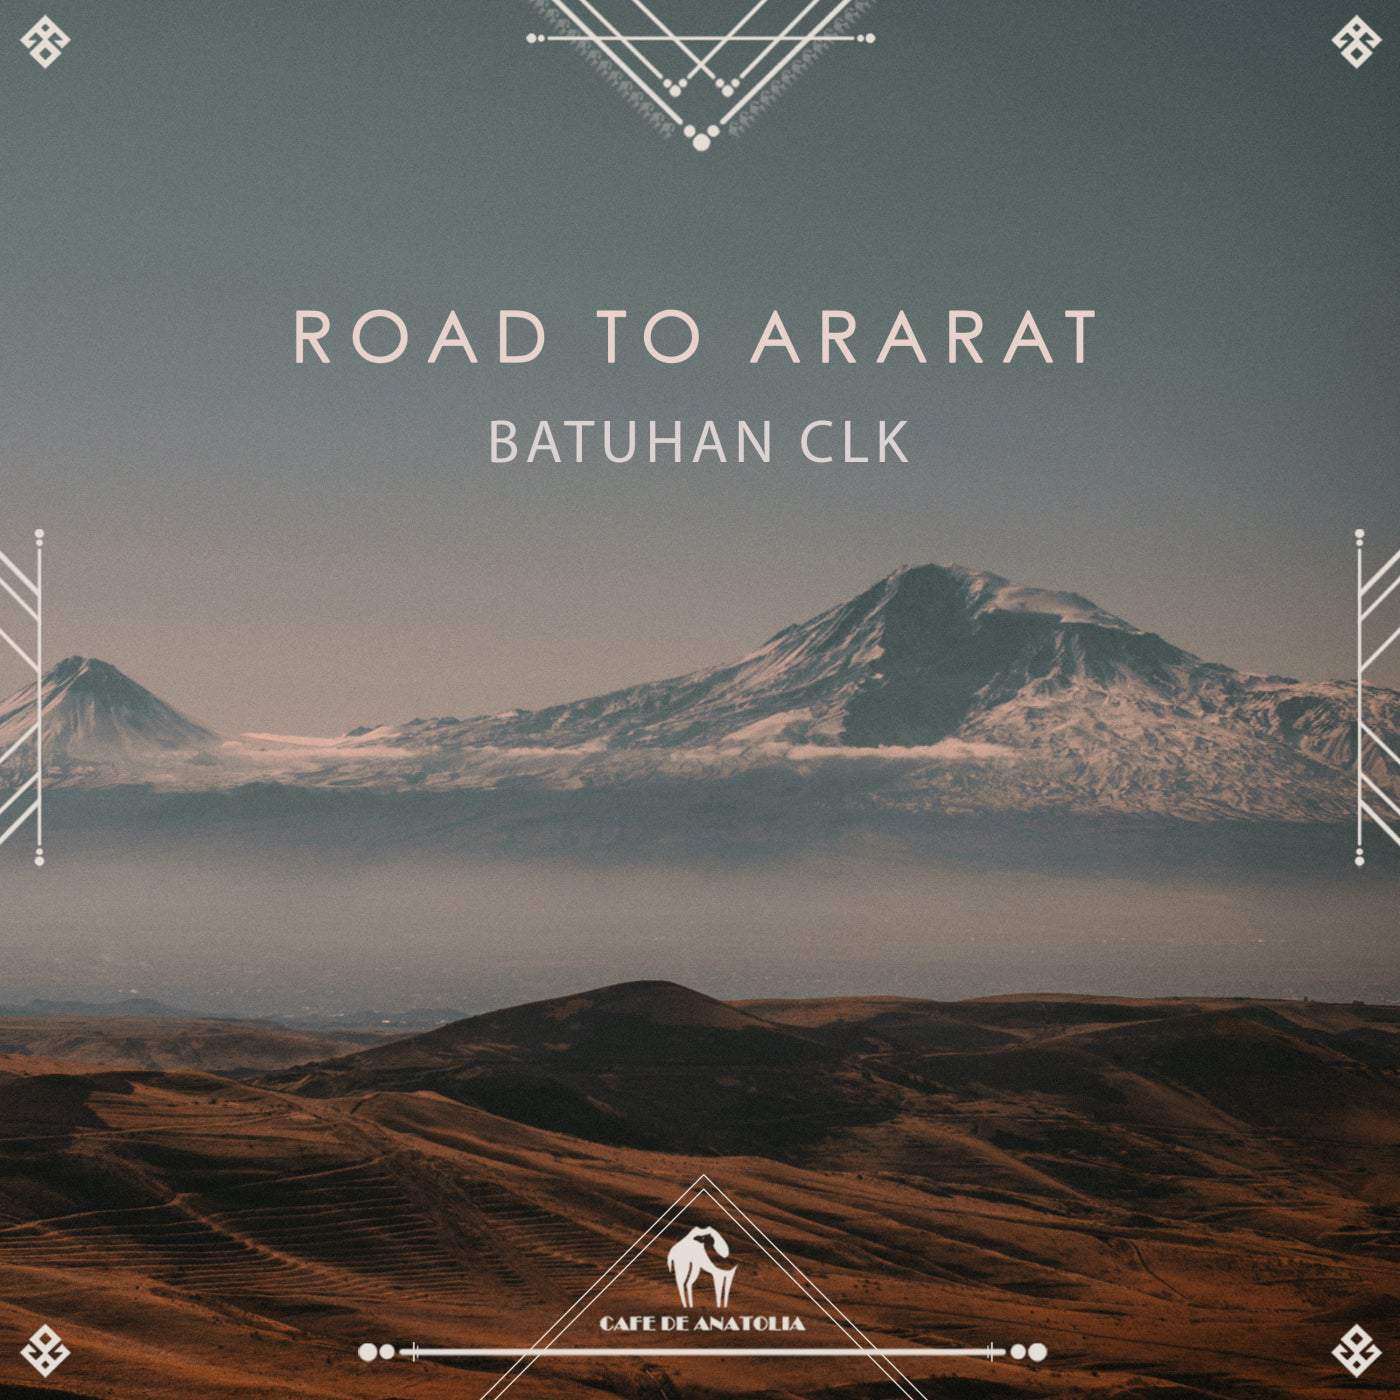 Download Cafe De Anatolia, Batuhan CLK - Road to Ararat [CDA114] on Electrobuzz